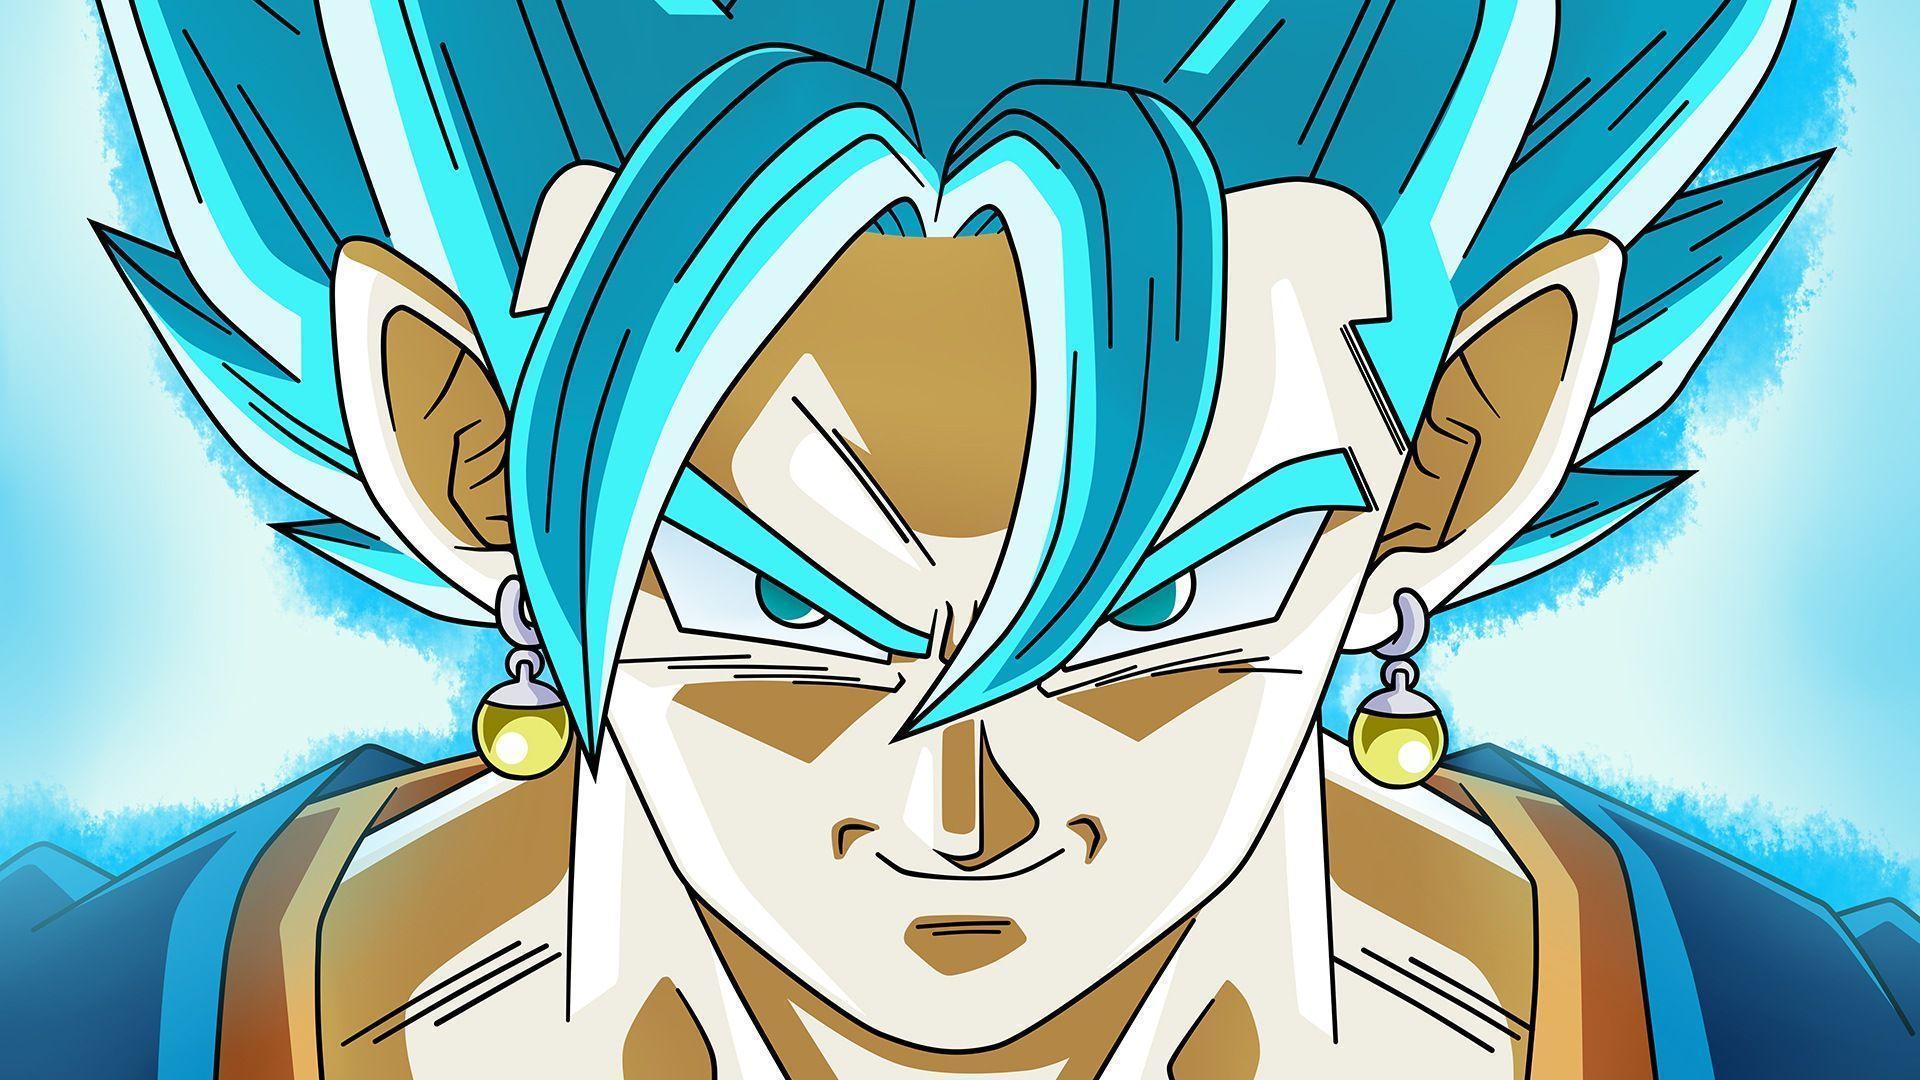 Vegito Super Saiyan Blue DBS Goku an... Wallpapers